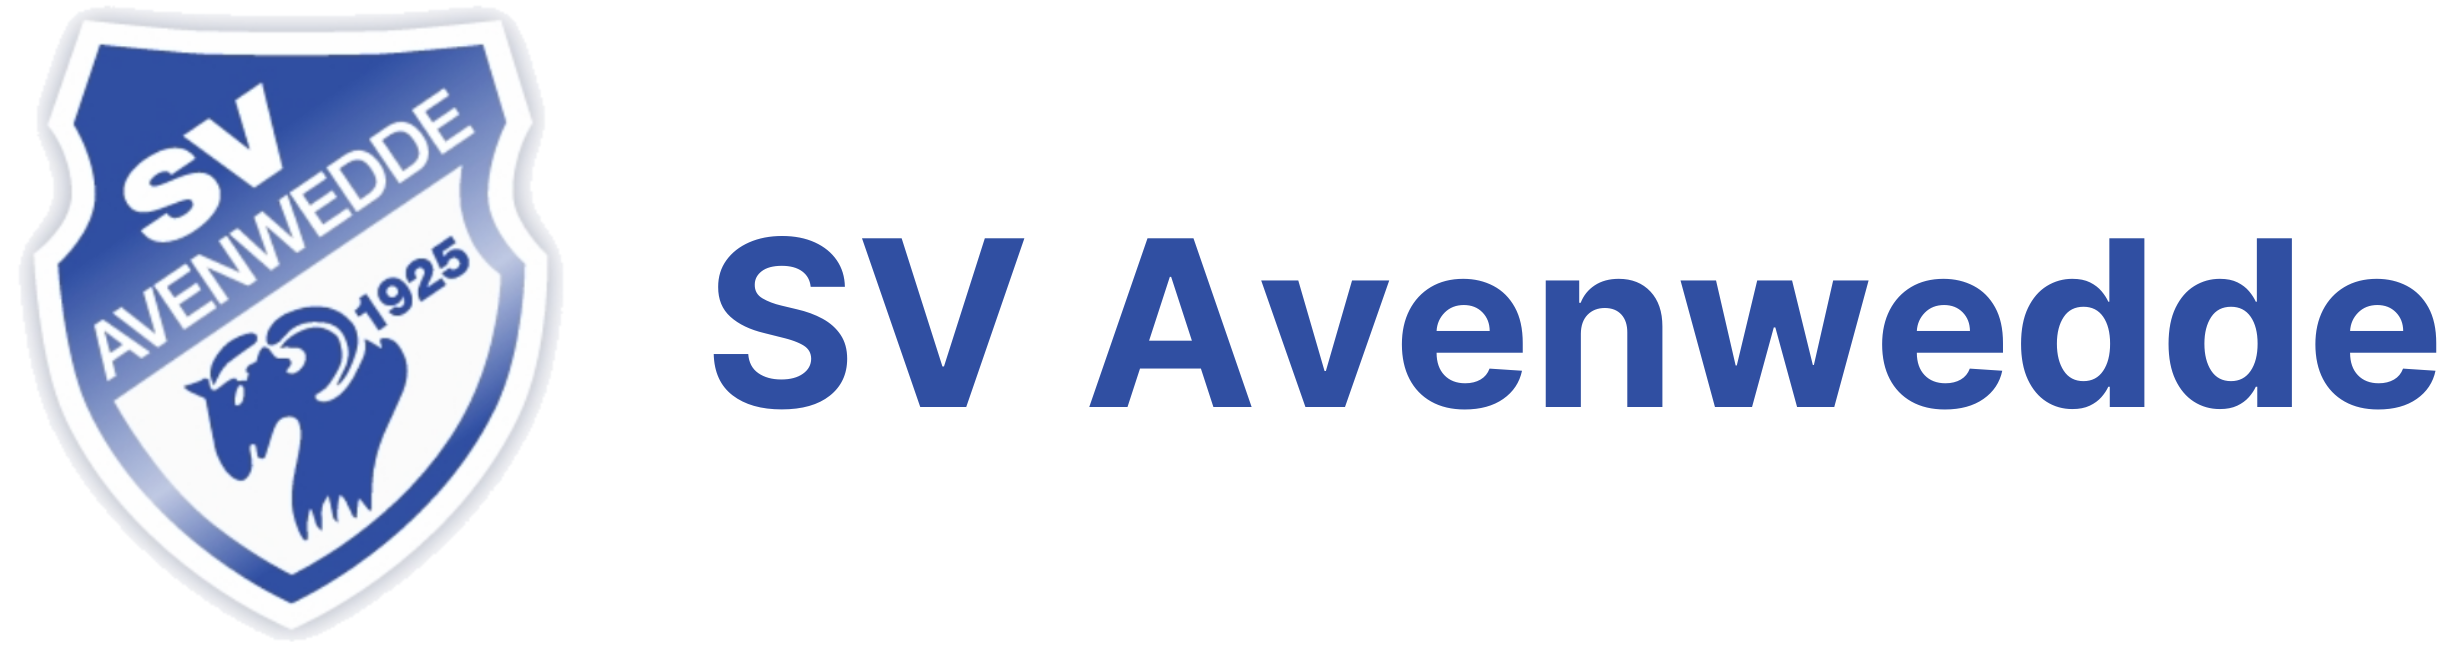 SV Avenwedde